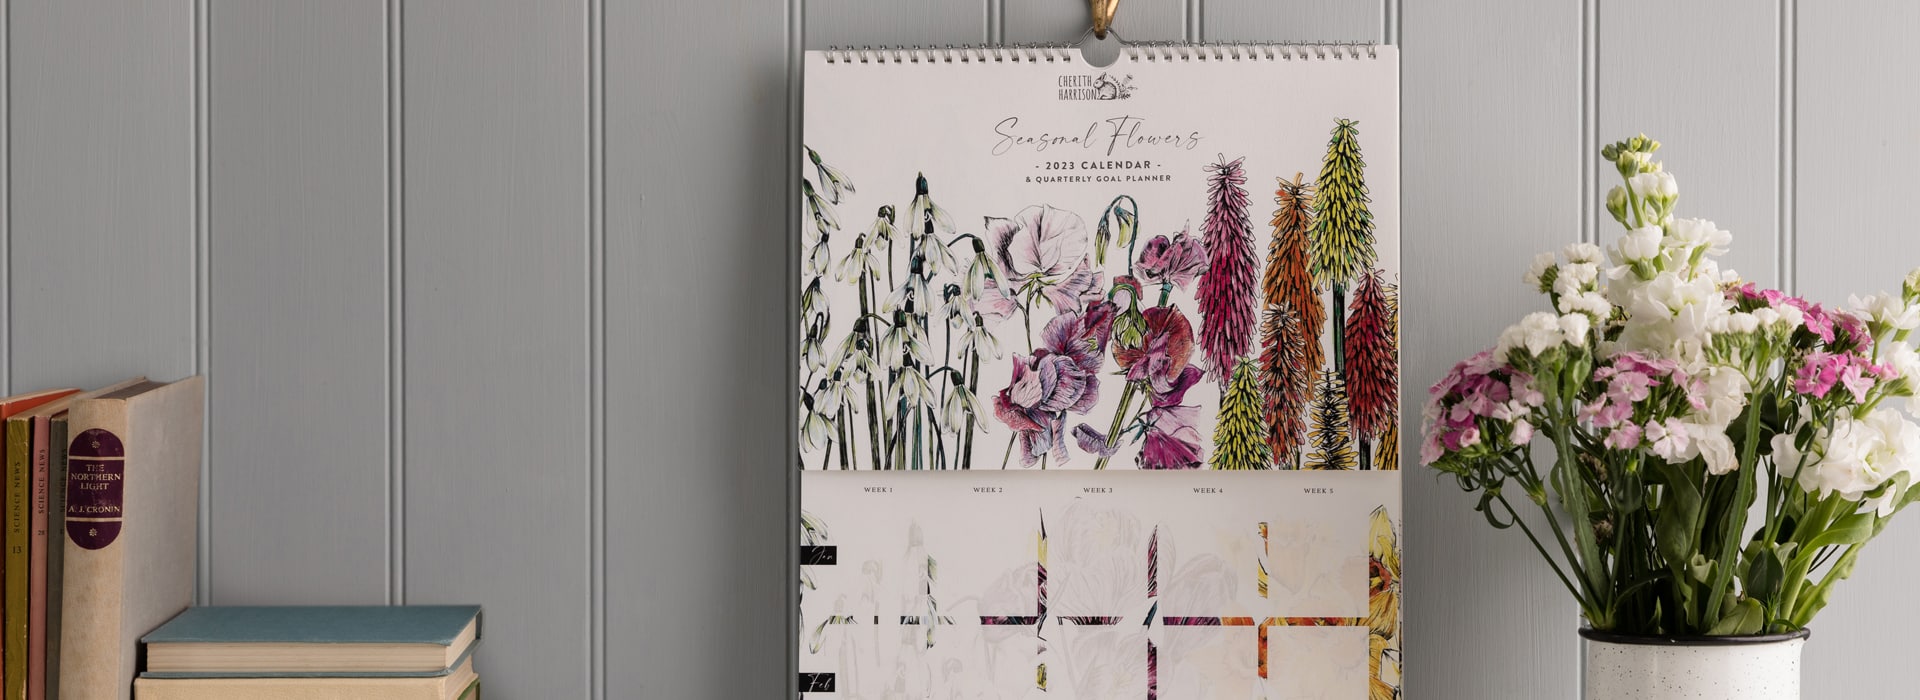 Cherith Harrison Seasonal Flowers Calendar